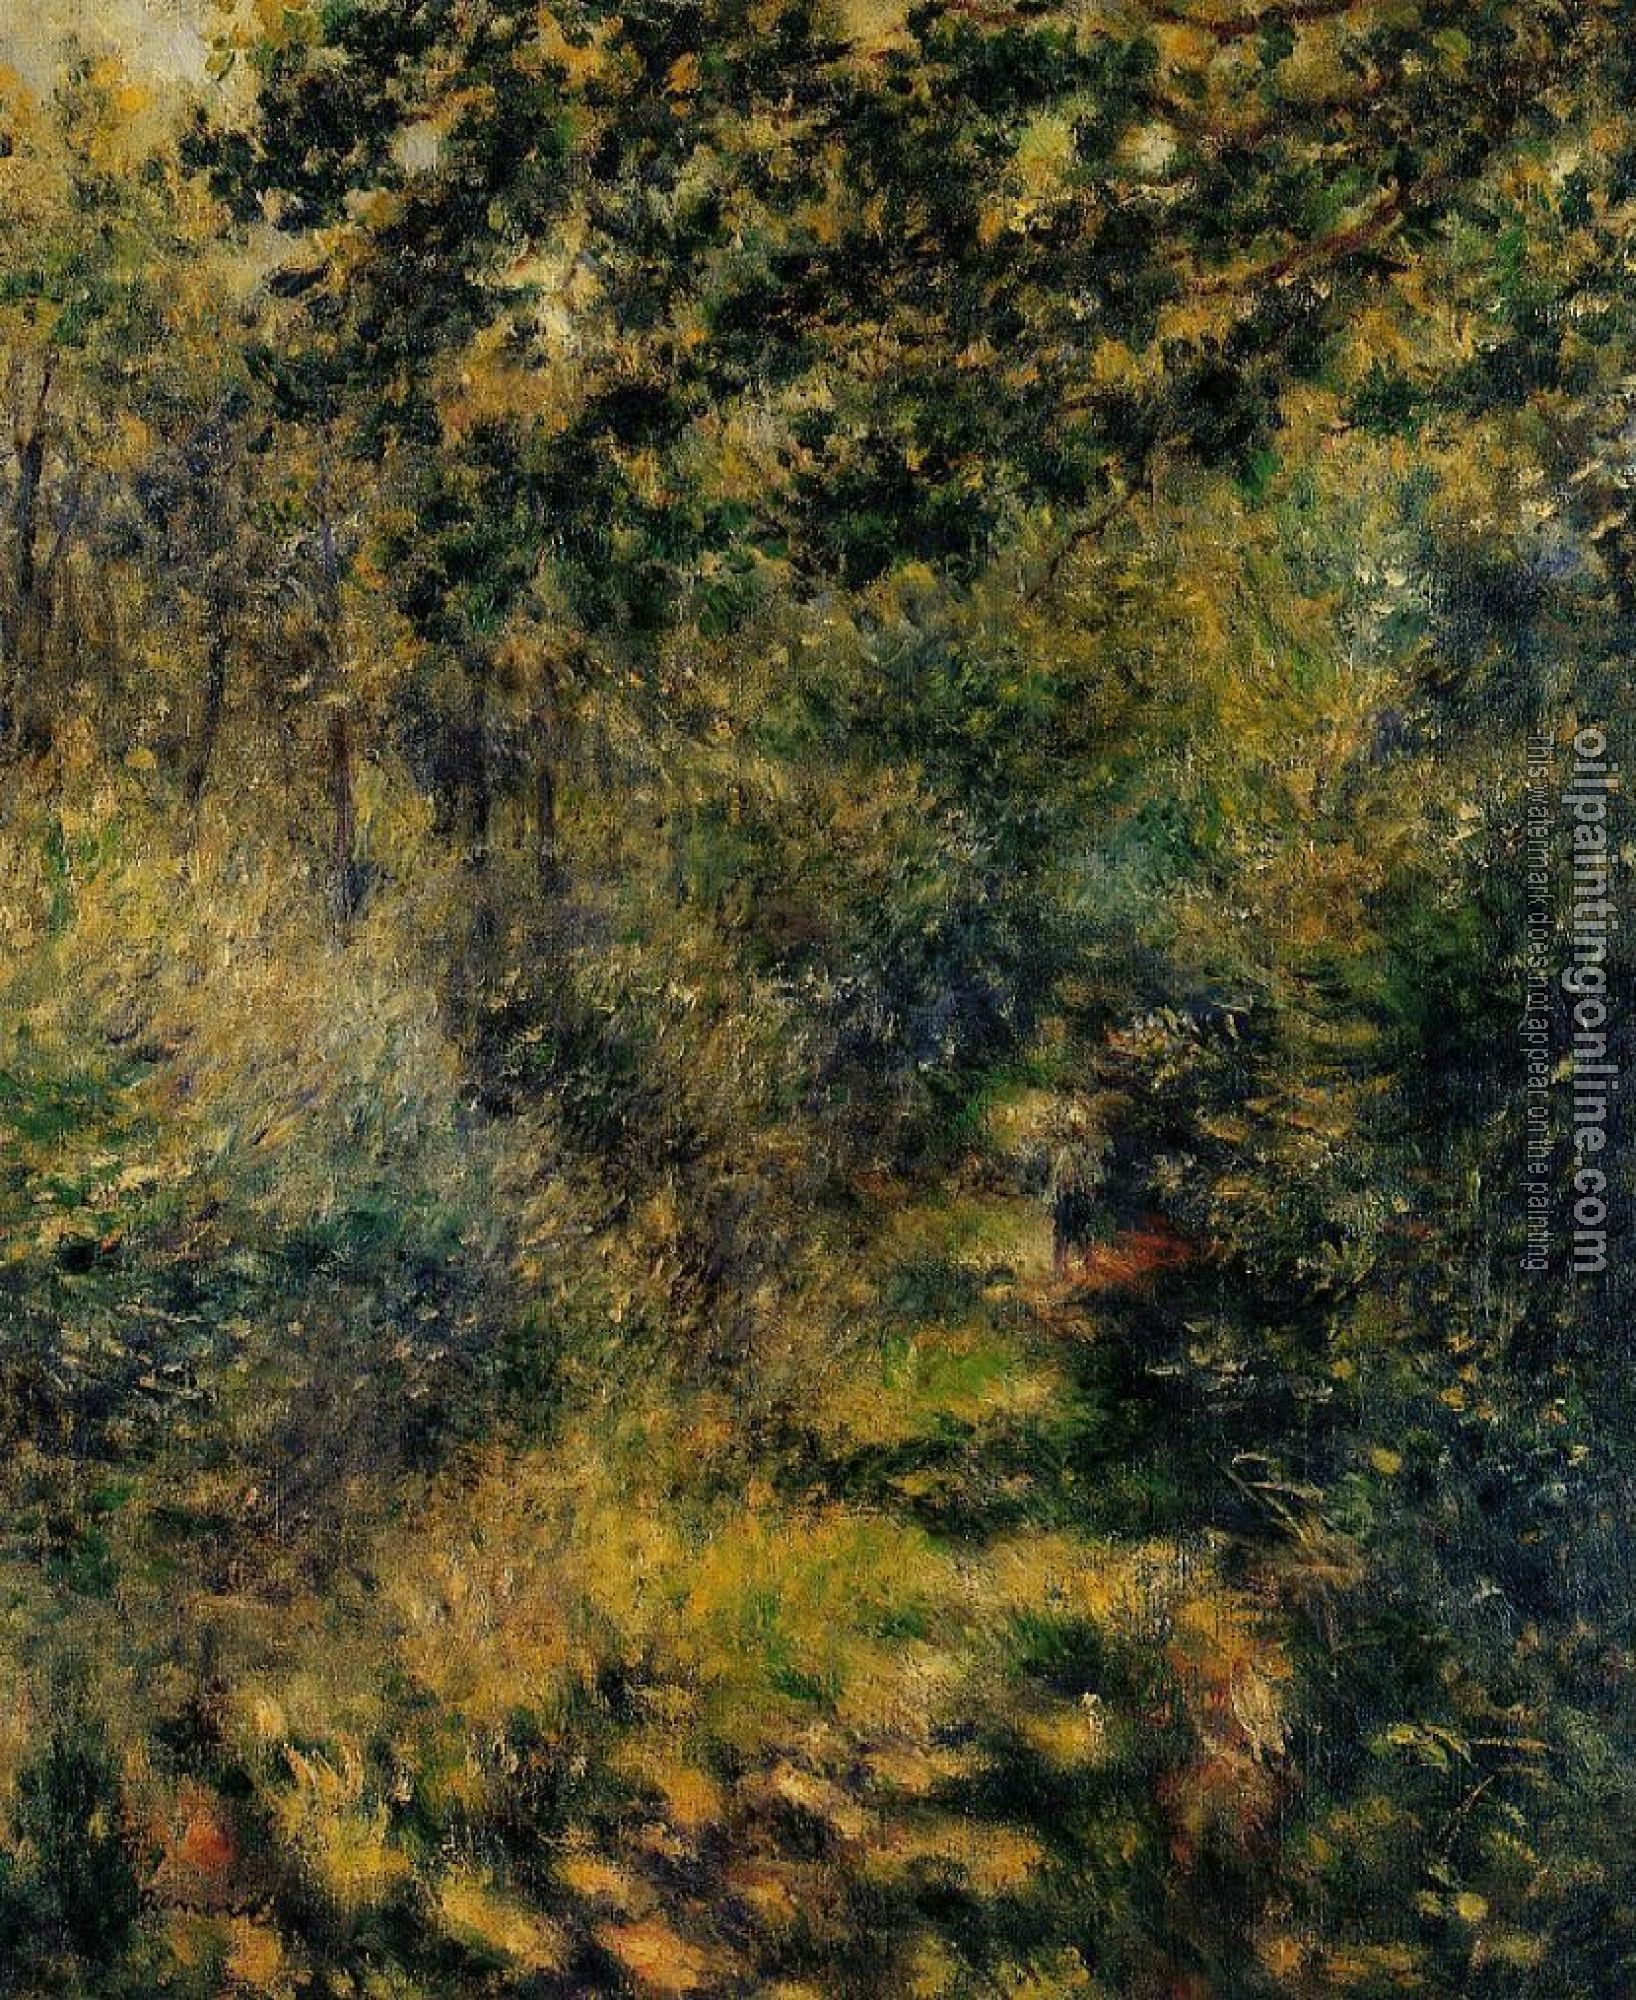 Renoir, Pierre Auguste - Path through the Woods